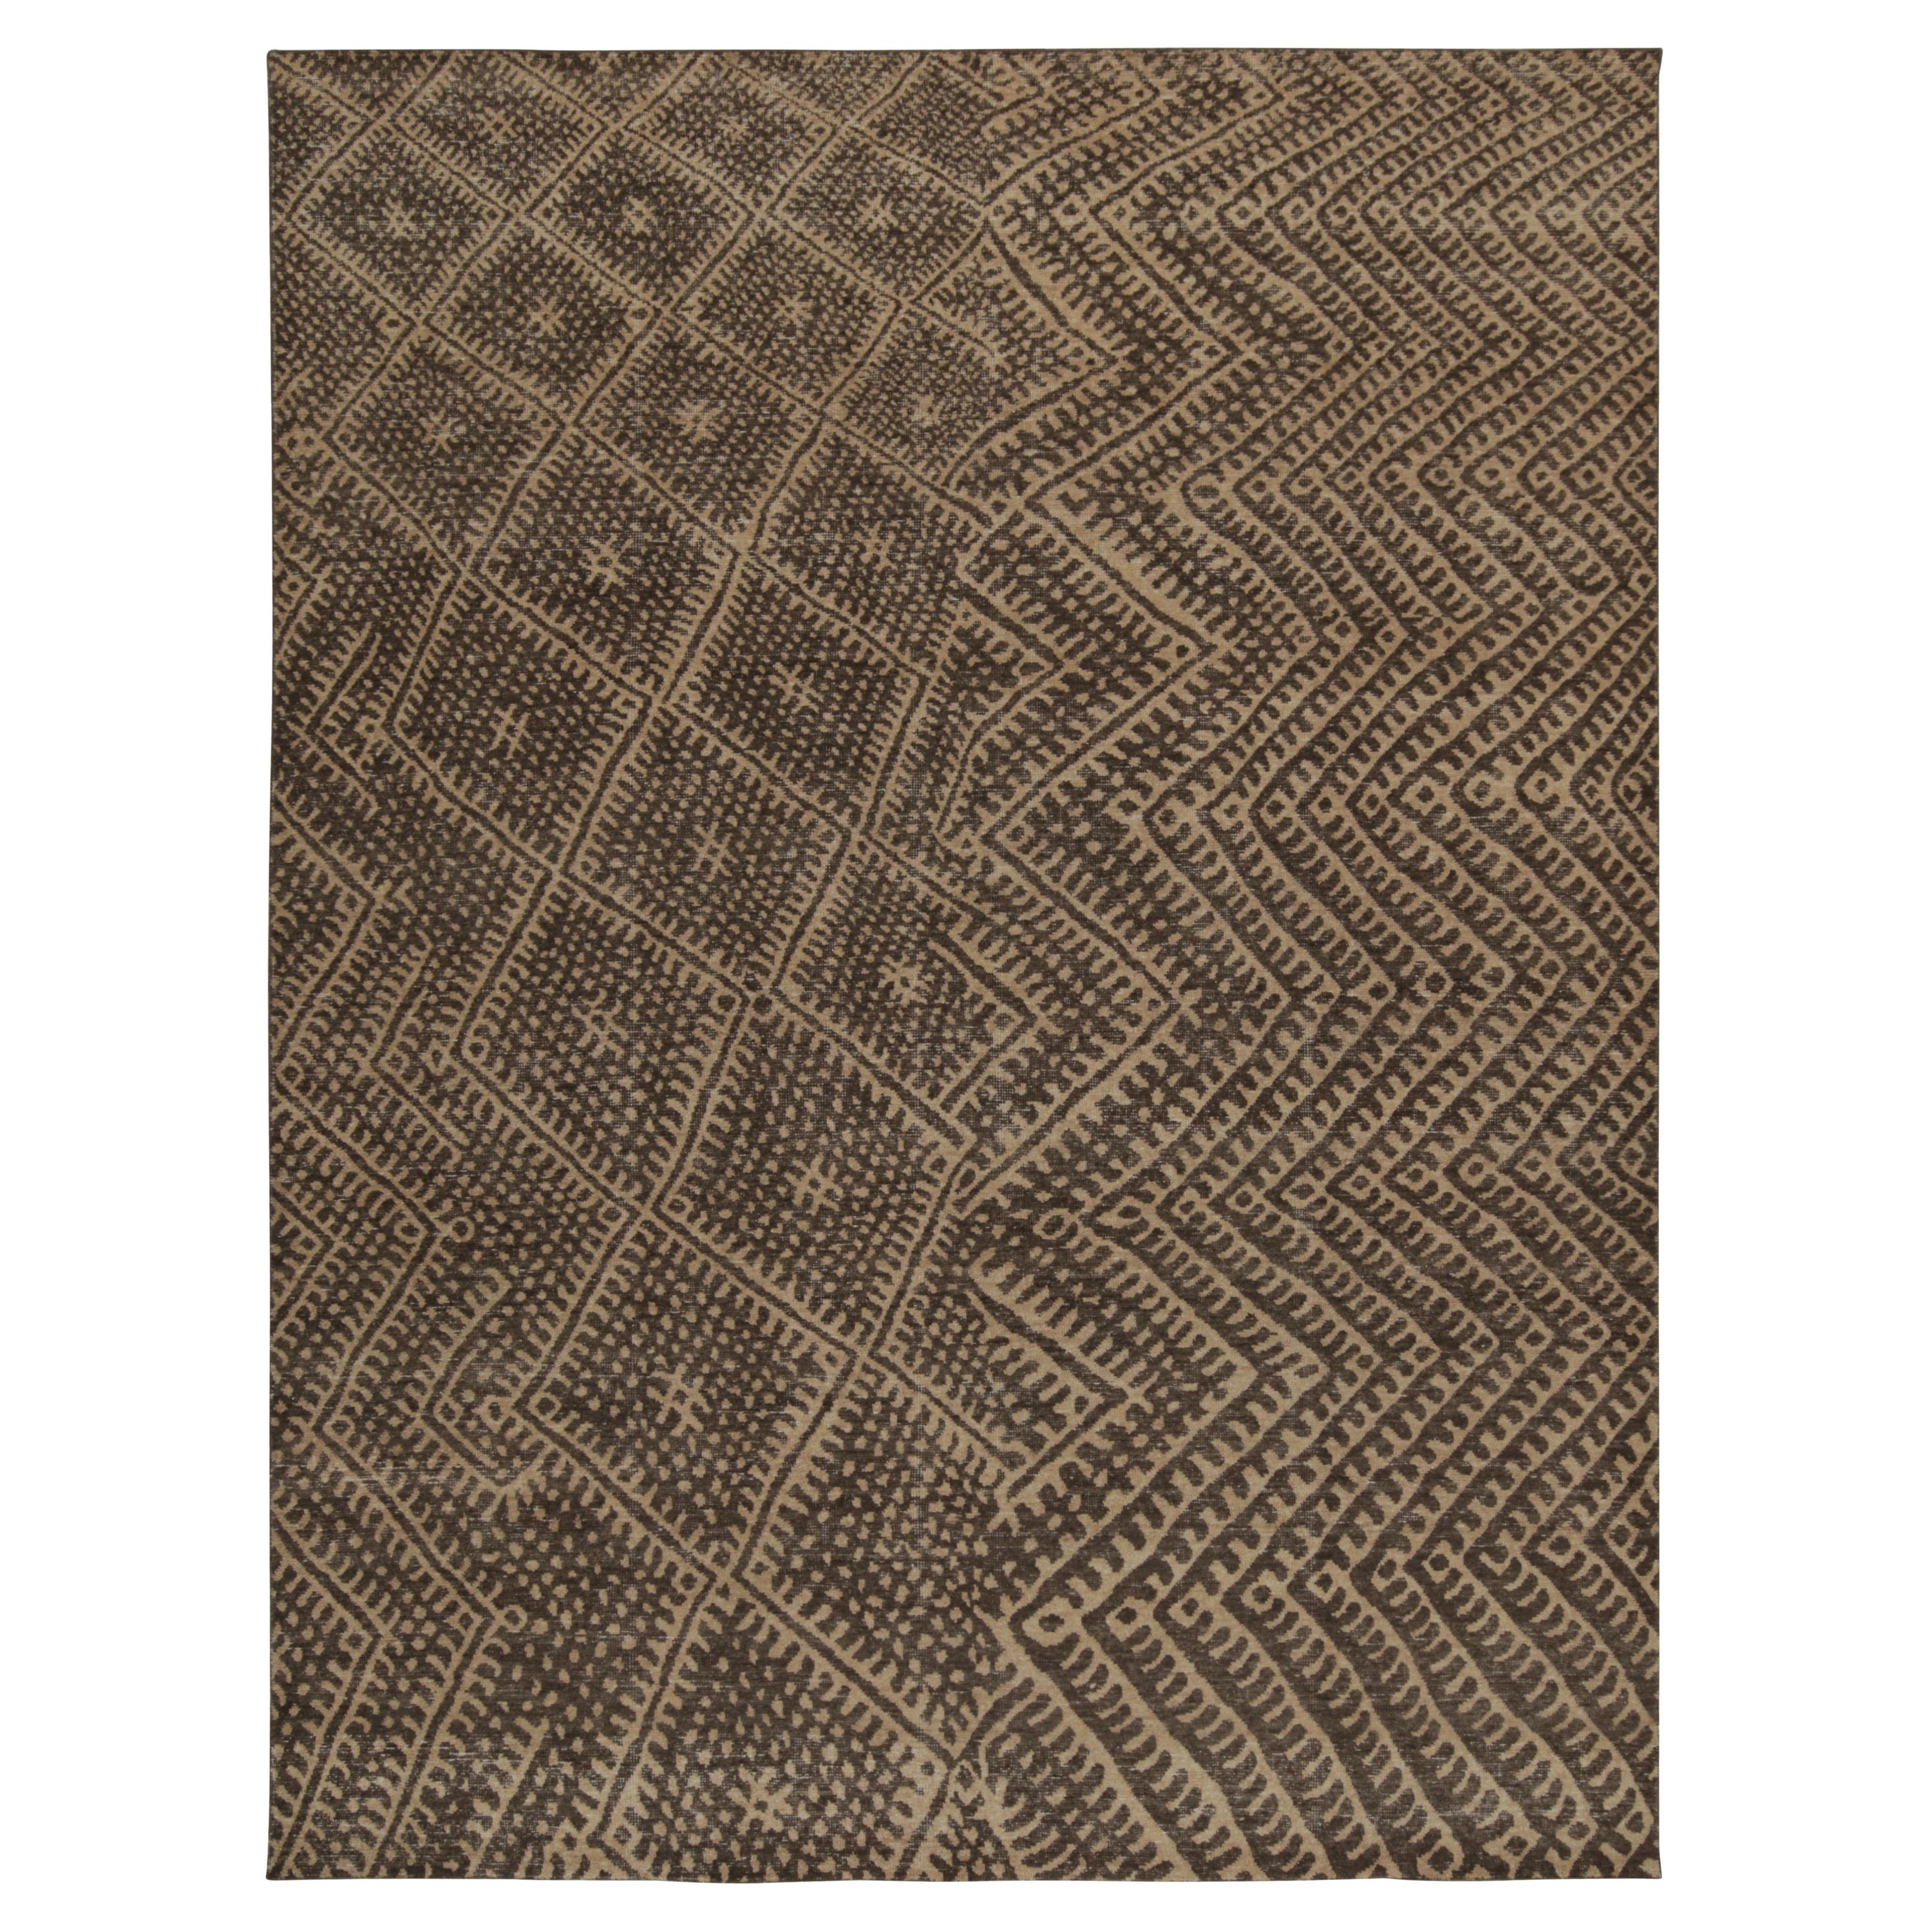 Rug & Kilim’s Distressed Moroccan Style Rug in Beige and Brown Geometric Pattern